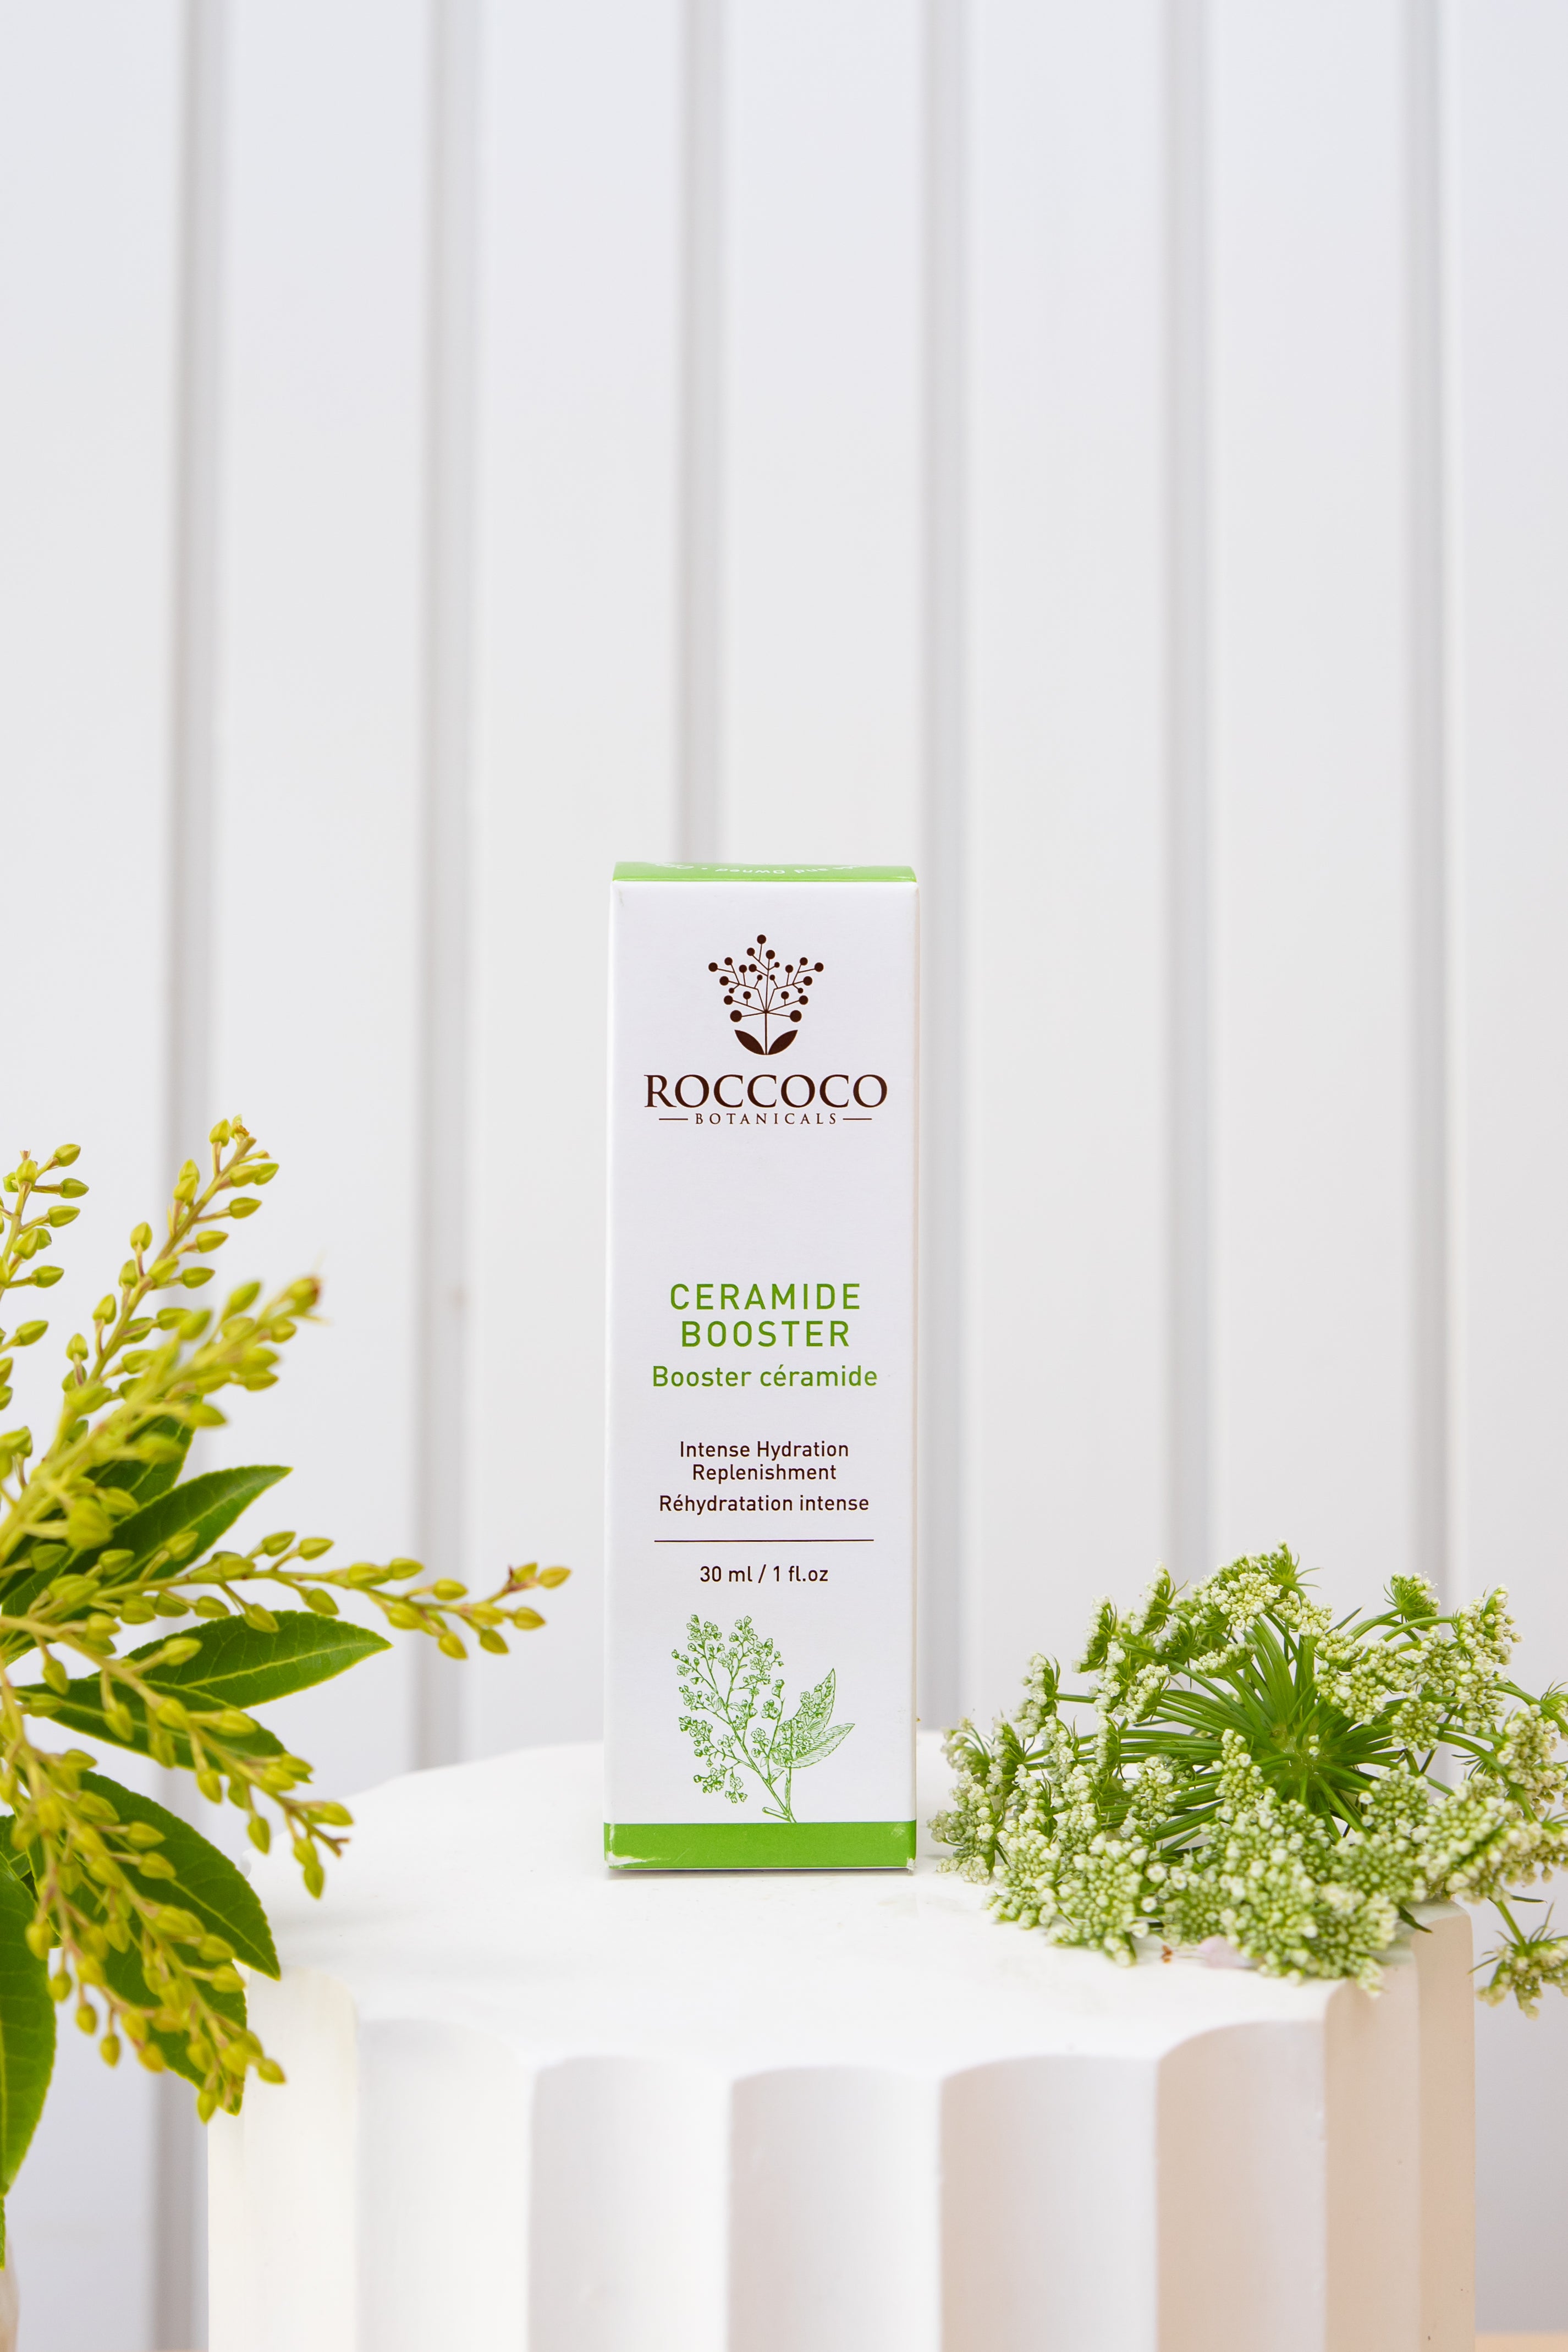 Roccoco Botanicals Ceramide Booster - Click to Buy!